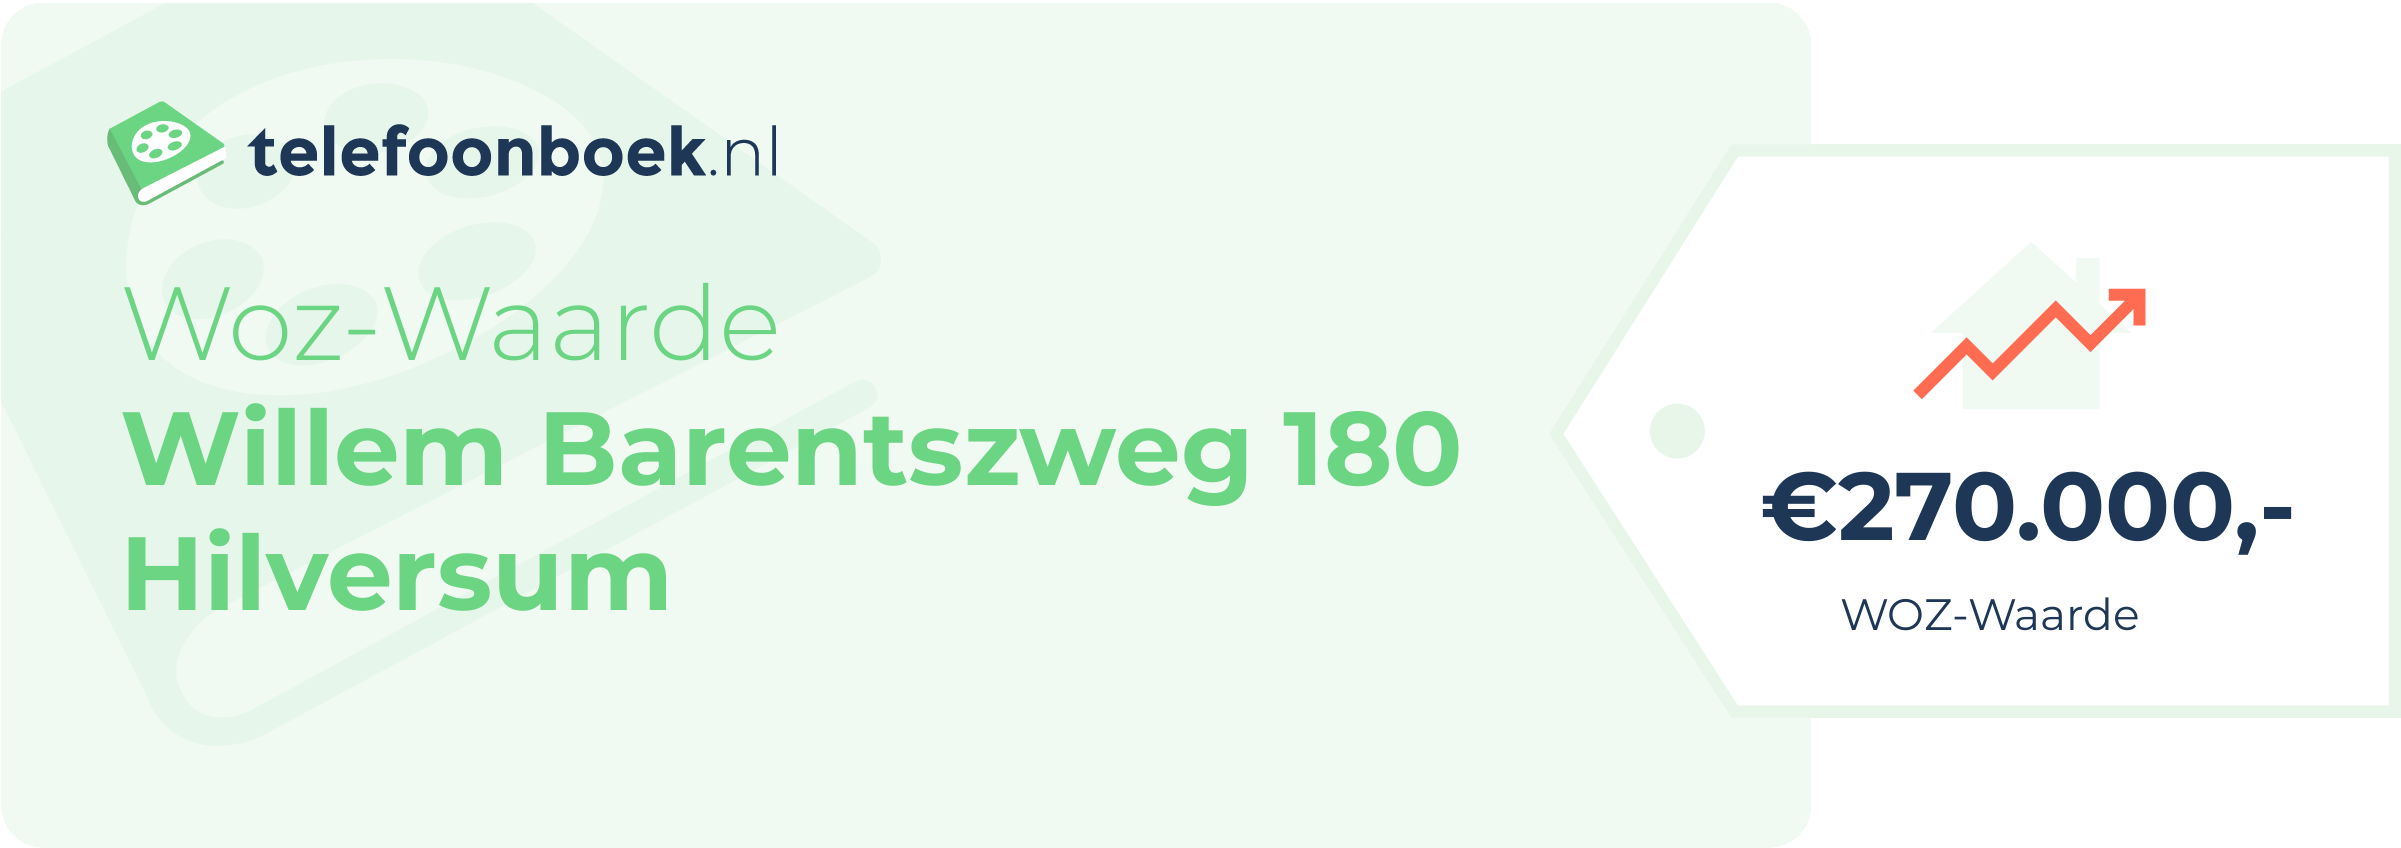 WOZ-waarde Willem Barentszweg 180 Hilversum